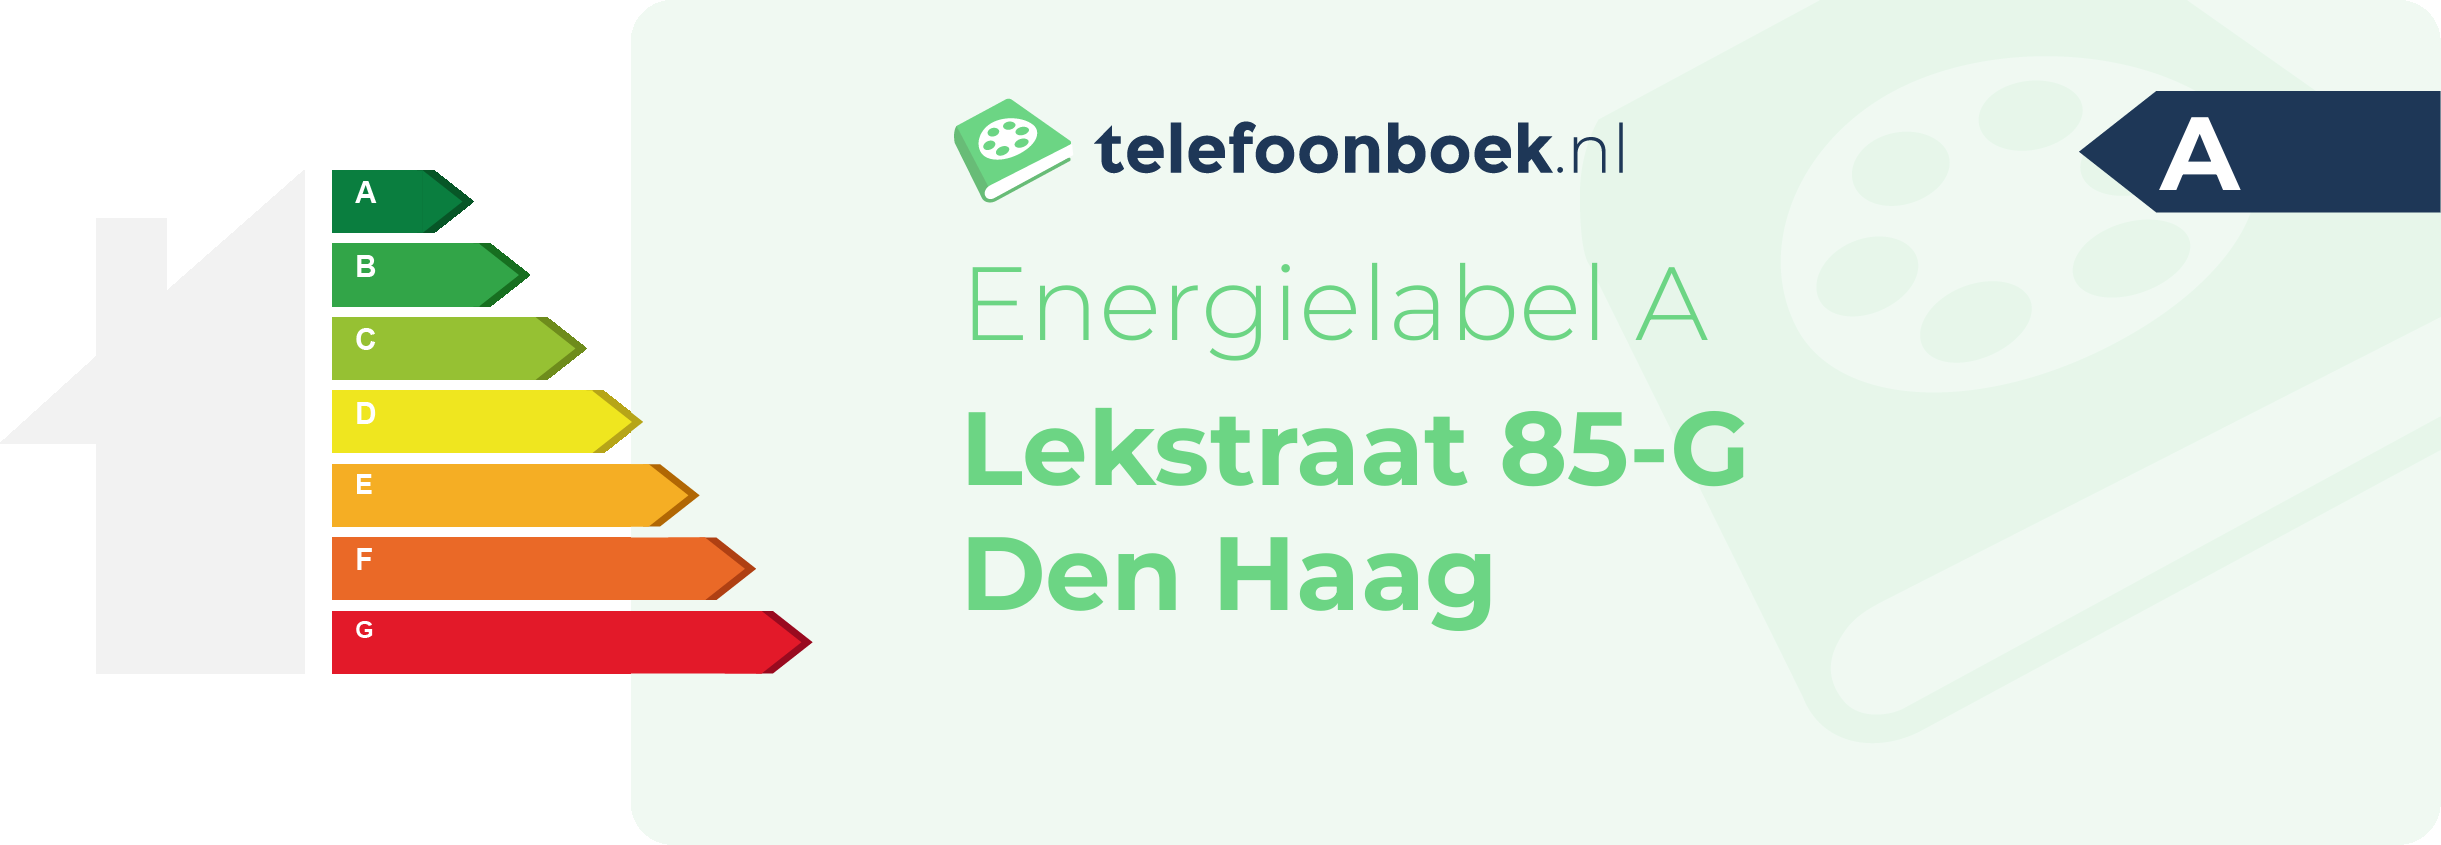 Energielabel Lekstraat 85-G Den Haag